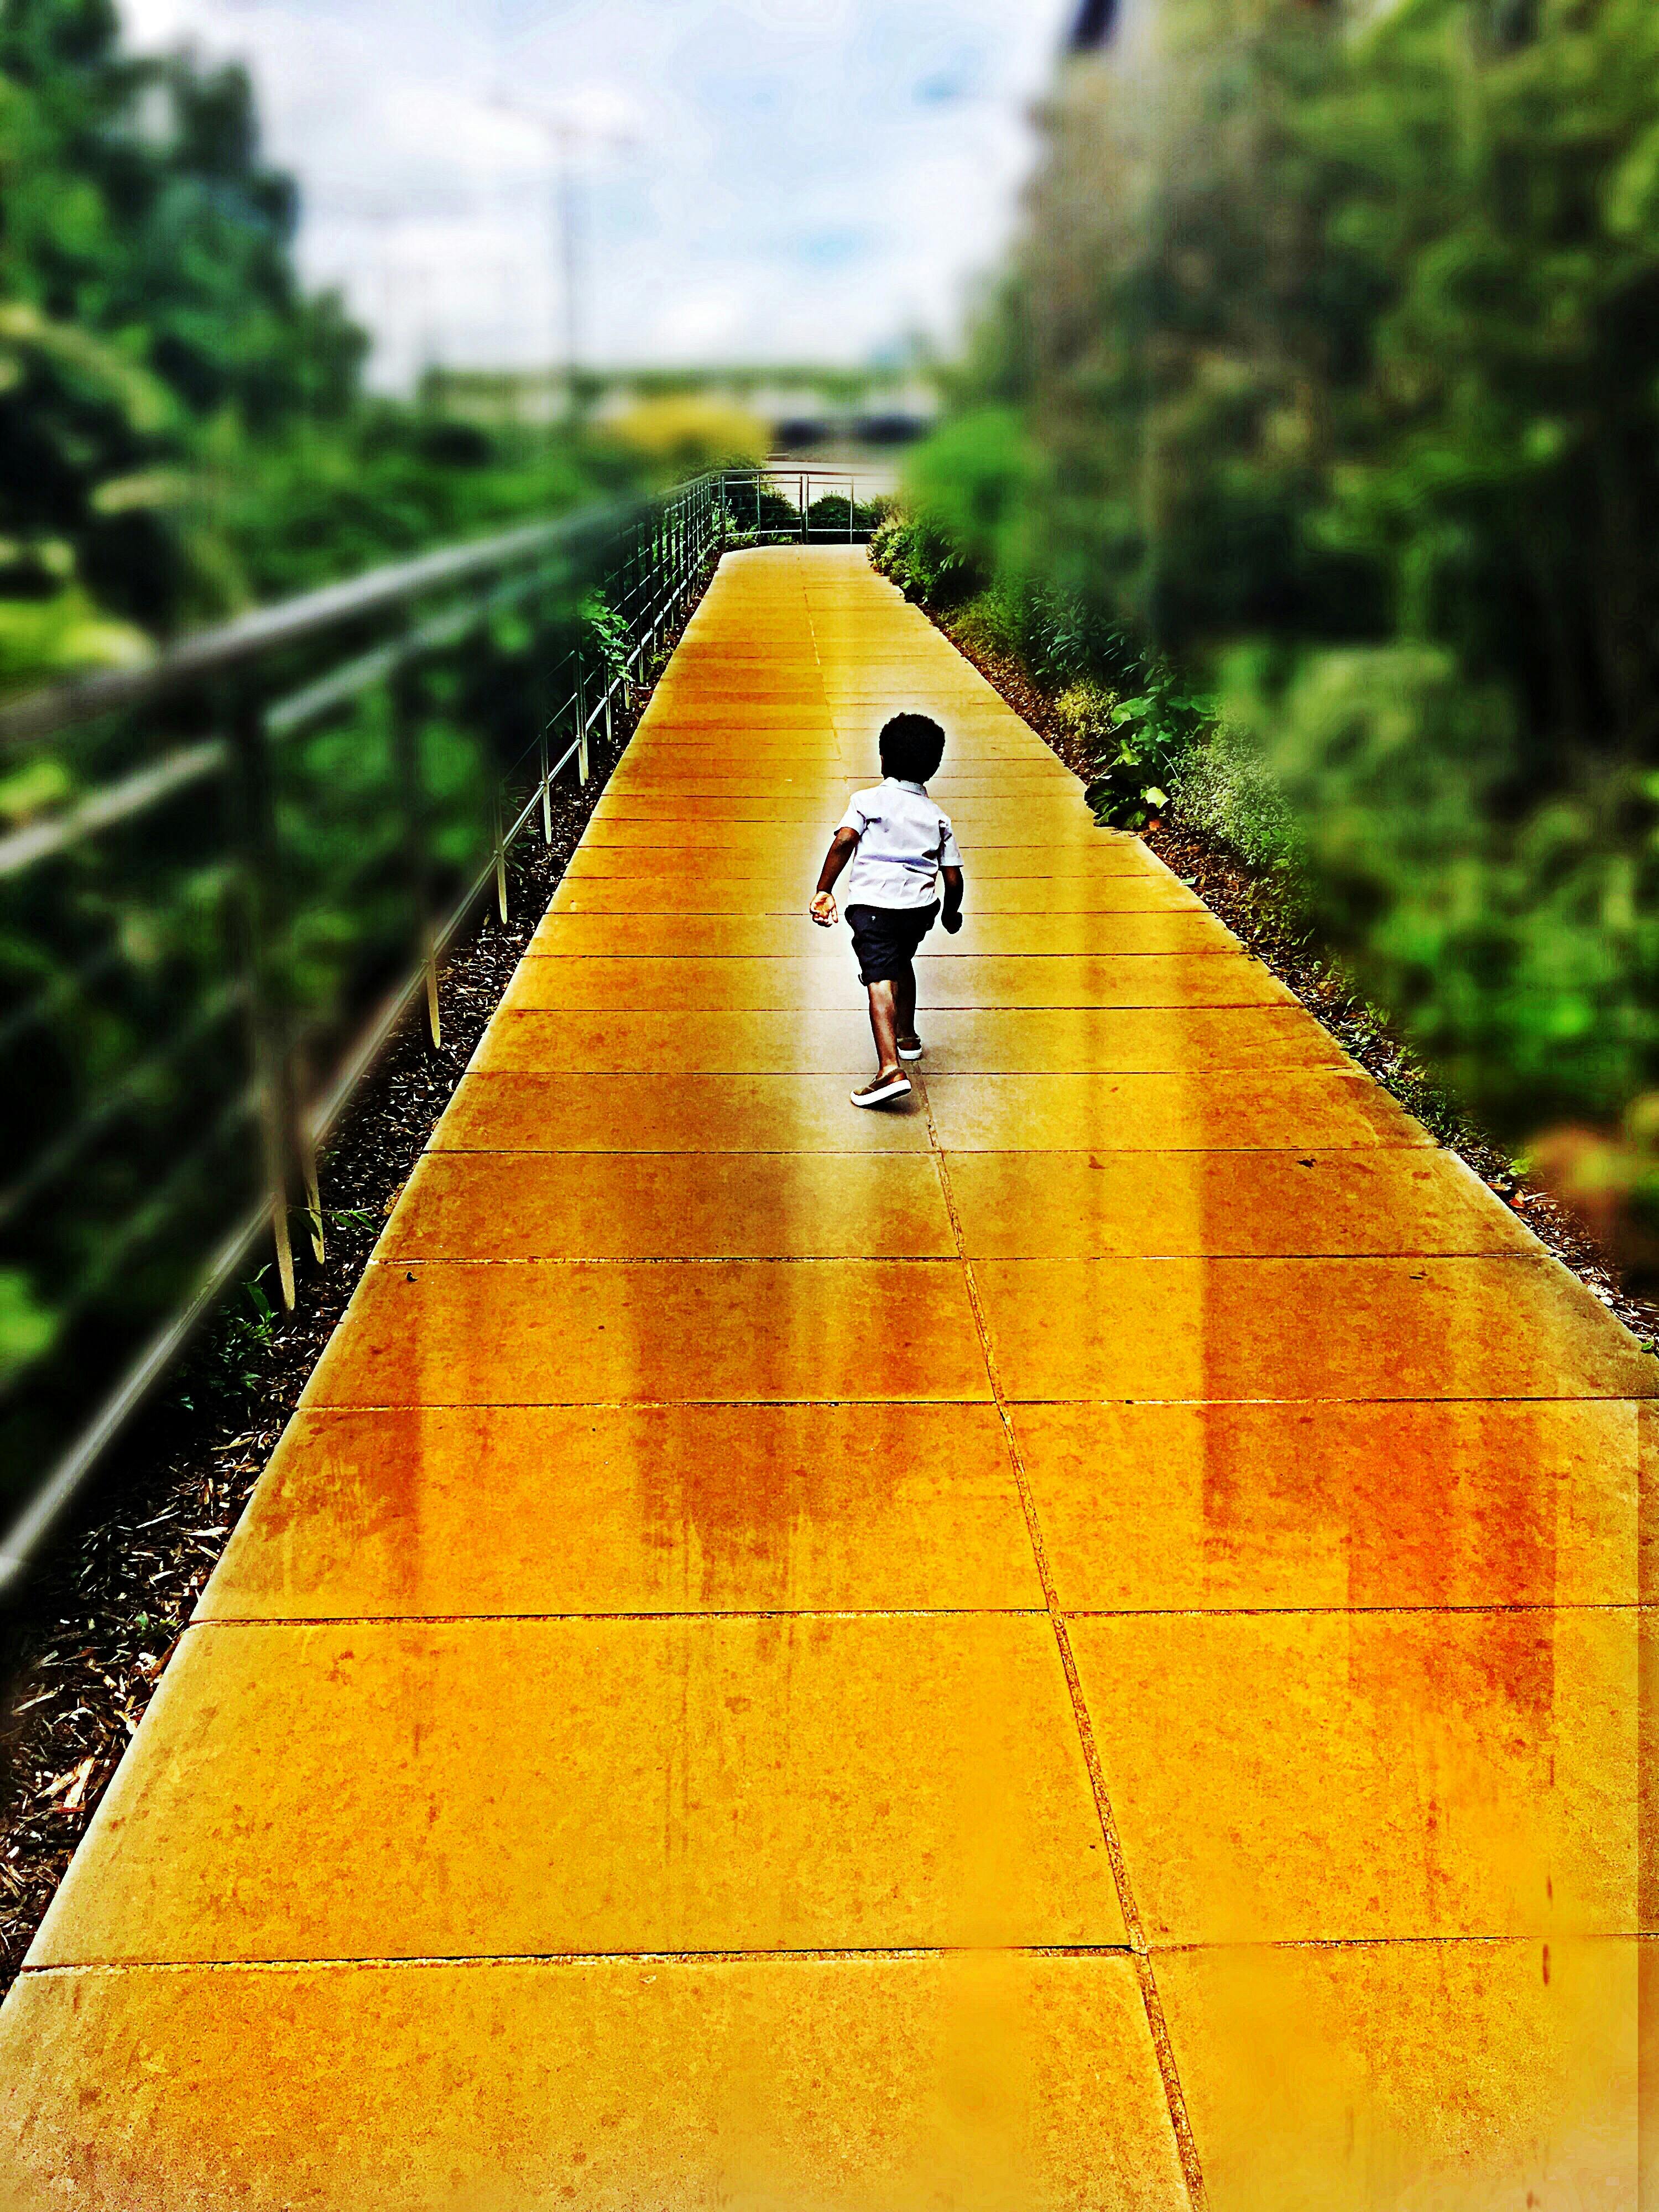 Free stock photo of Boy running, path, yellow